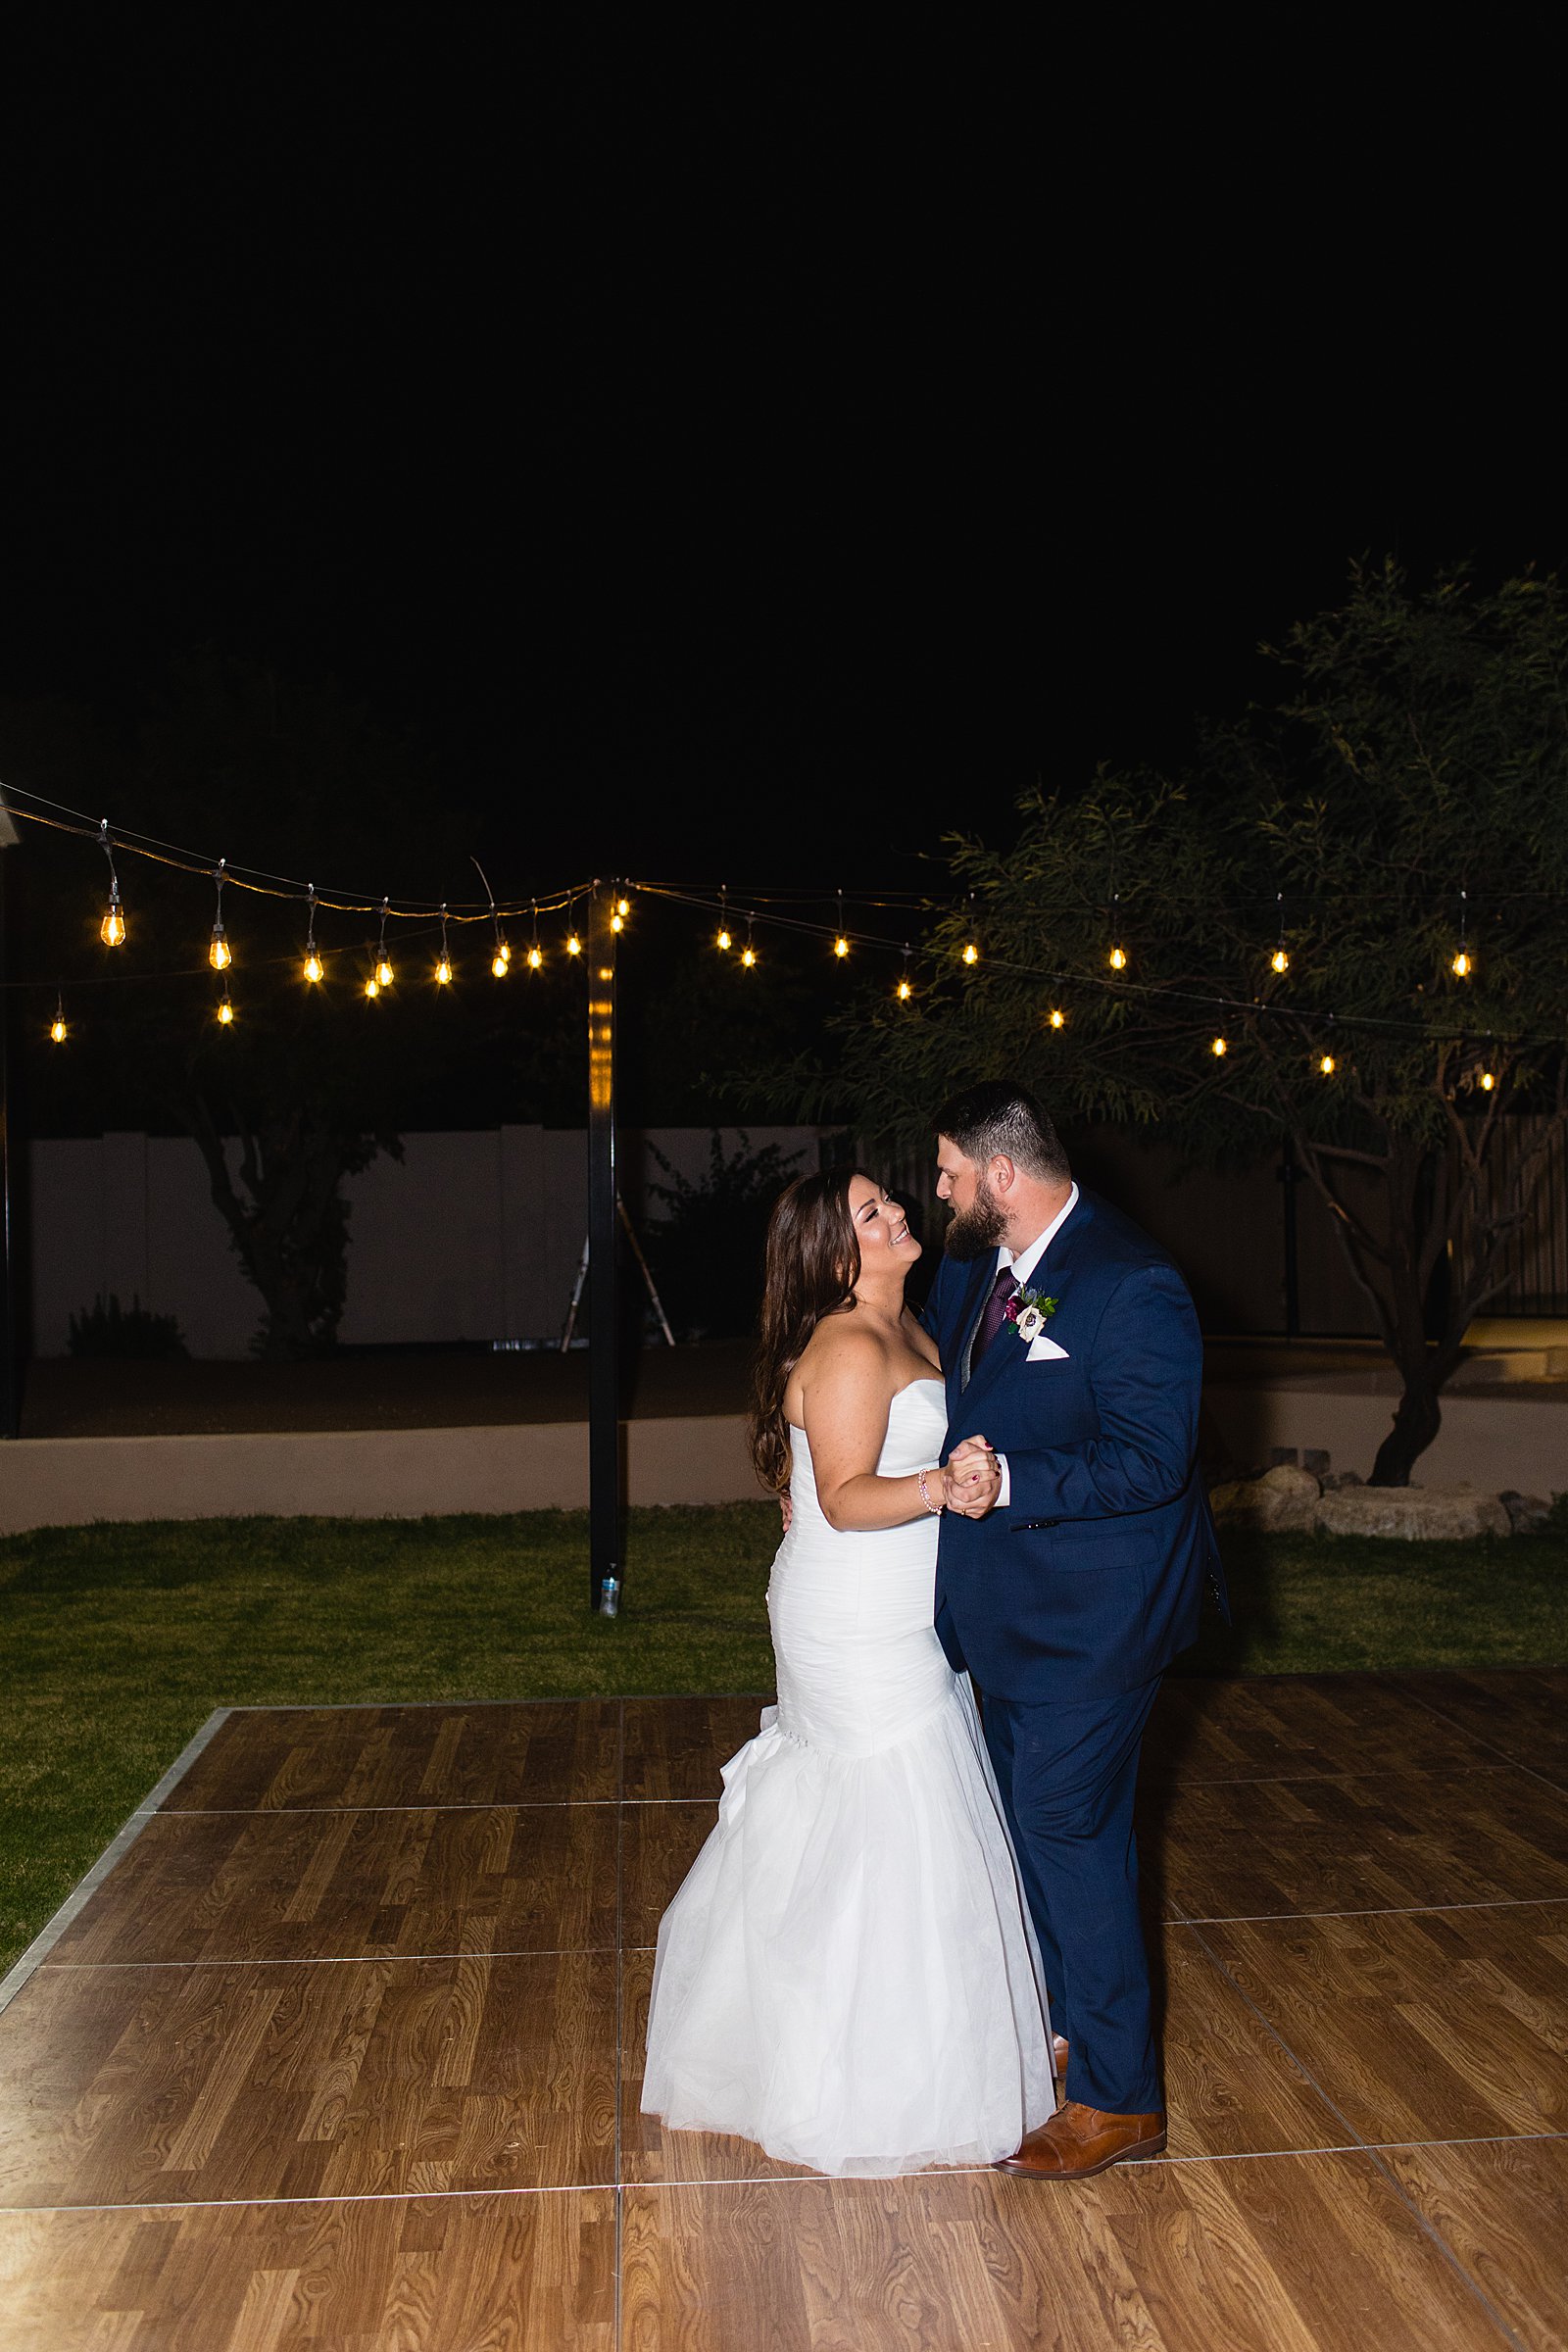 Bride and Groom sharing first dance at their Arizona backyard wedding reception by Arizona wedding photographer PMA Photography.